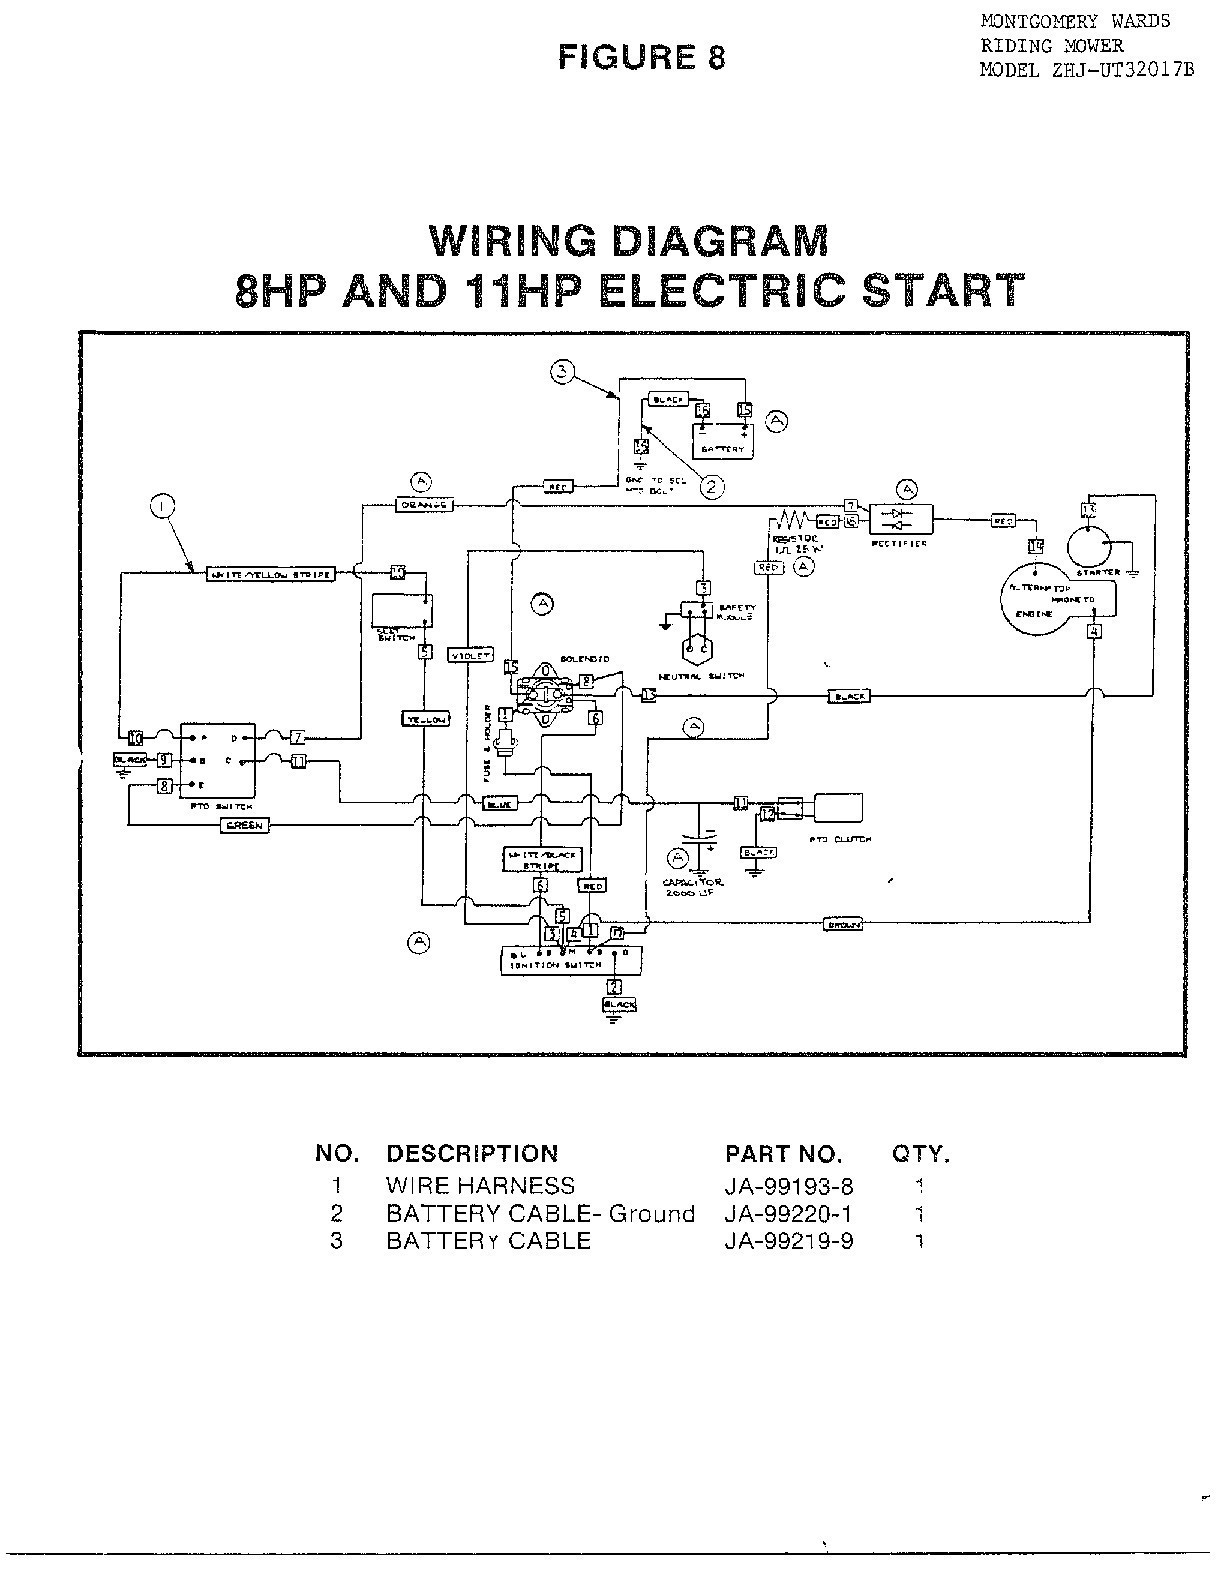 Briggs Stratton 19.5 Hp Diagram Wiring Diagram for A Briggs and Stratton 19 5 Hp Engine Of Briggs Stratton 19.5 Hp Diagram